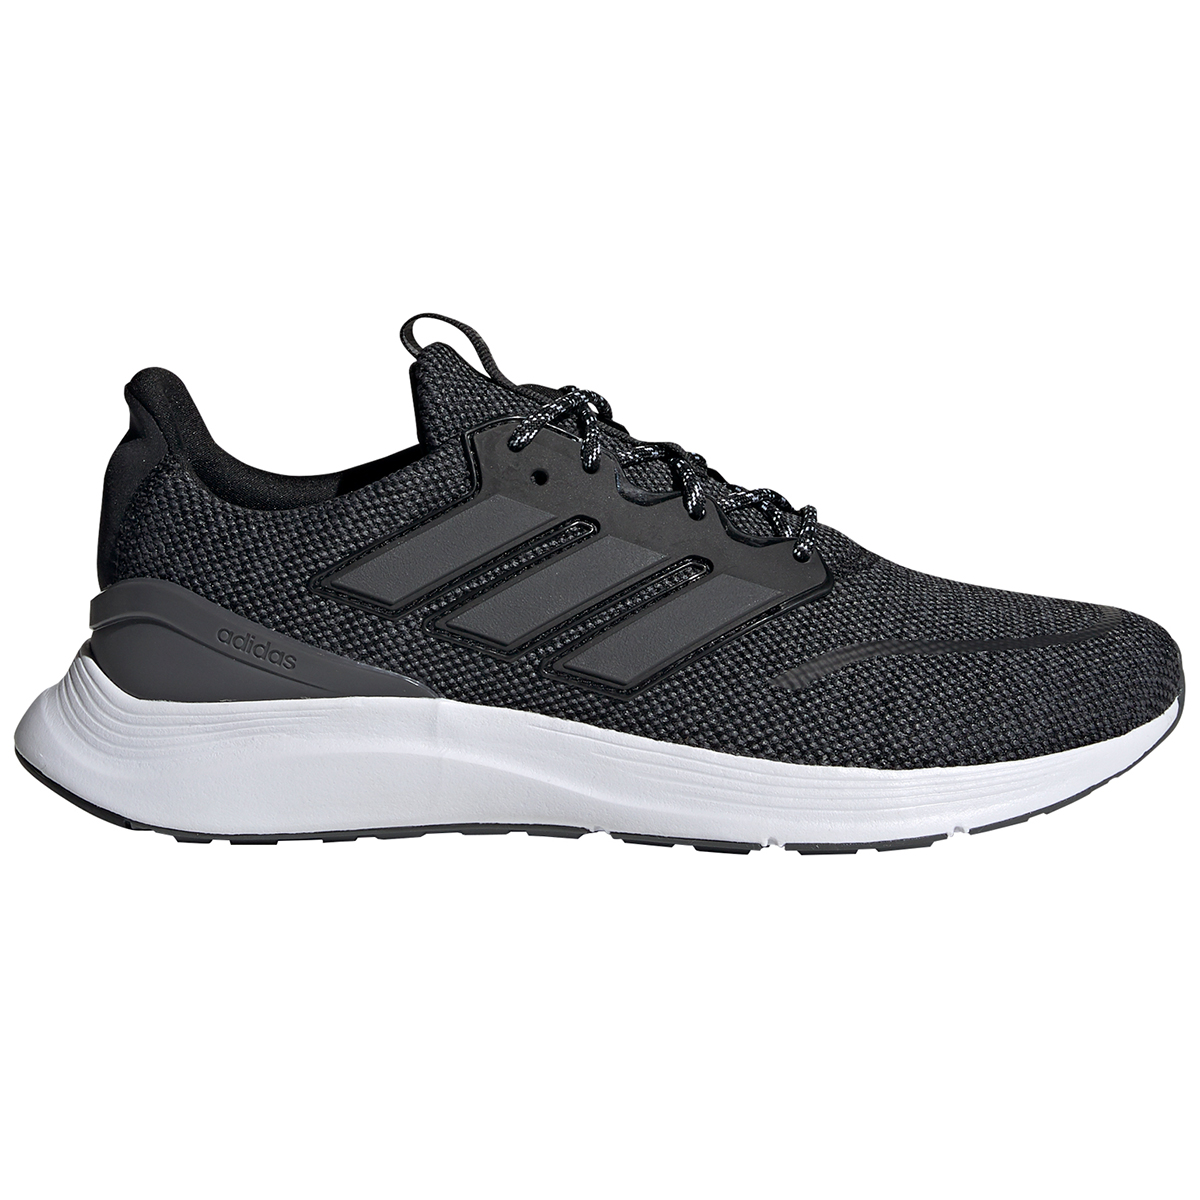 Adidas Men's Energy Falcon Running Shoes - Black, 8